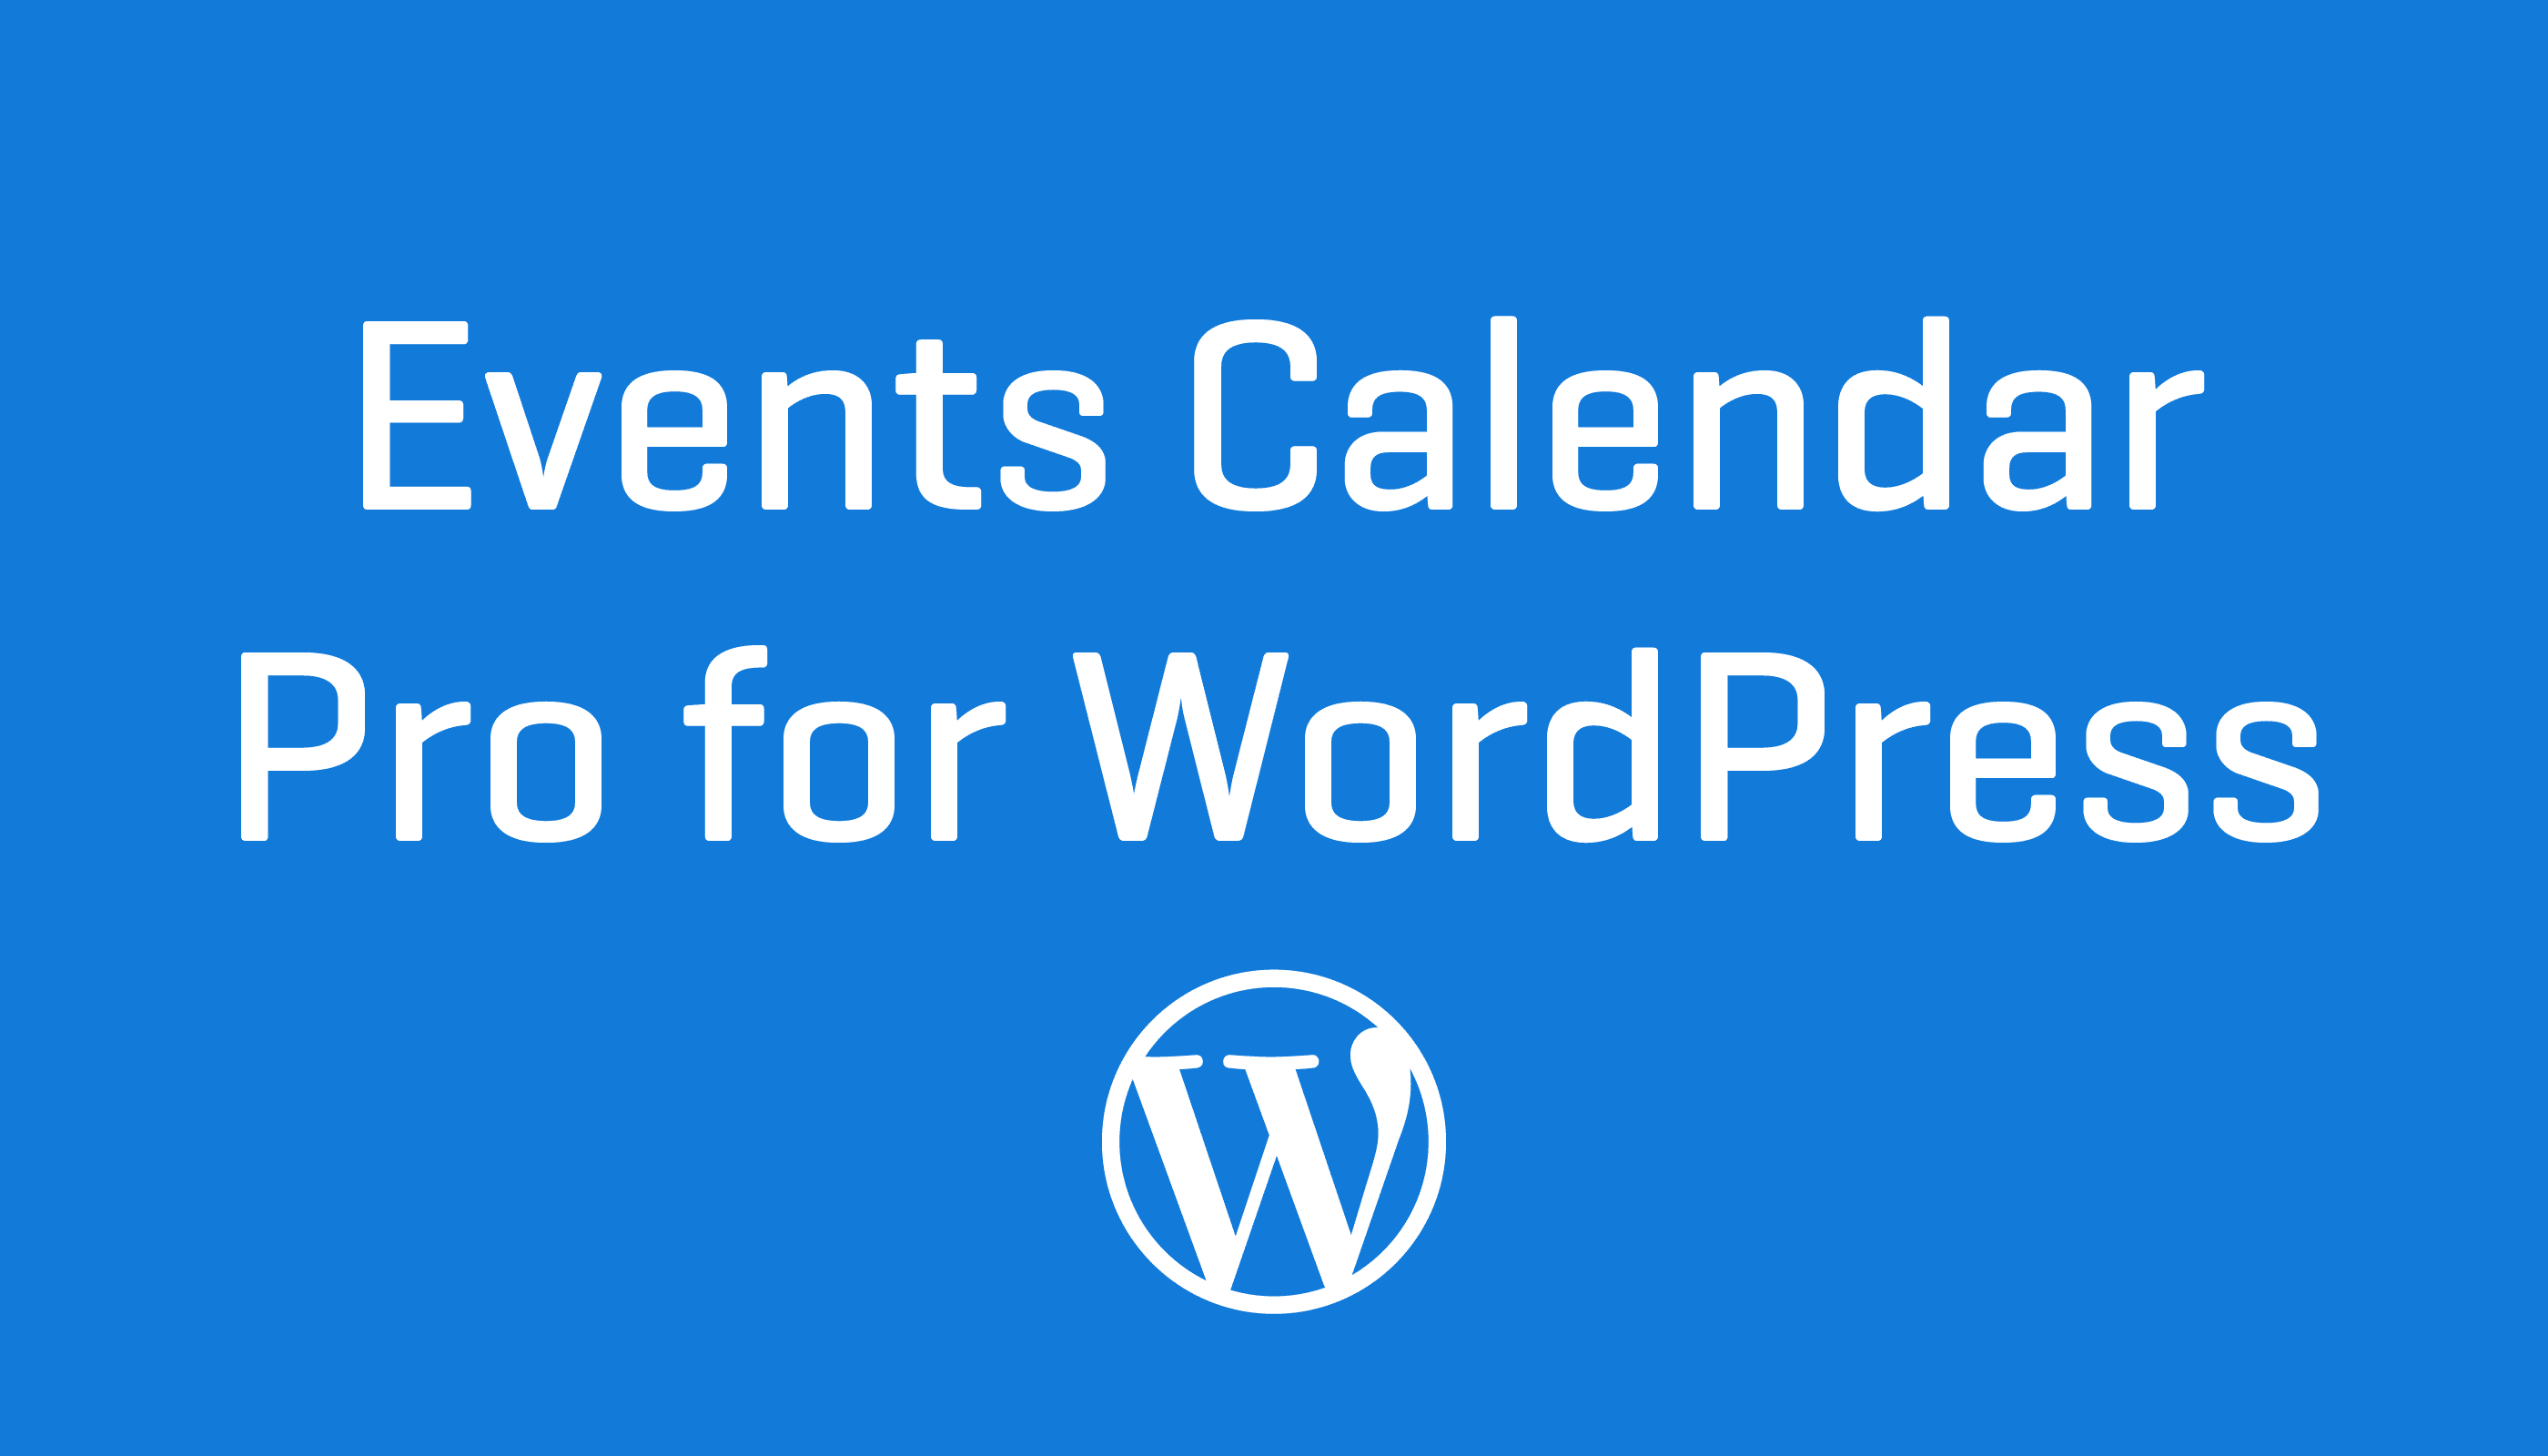 Events Calendar Pro for WordPress